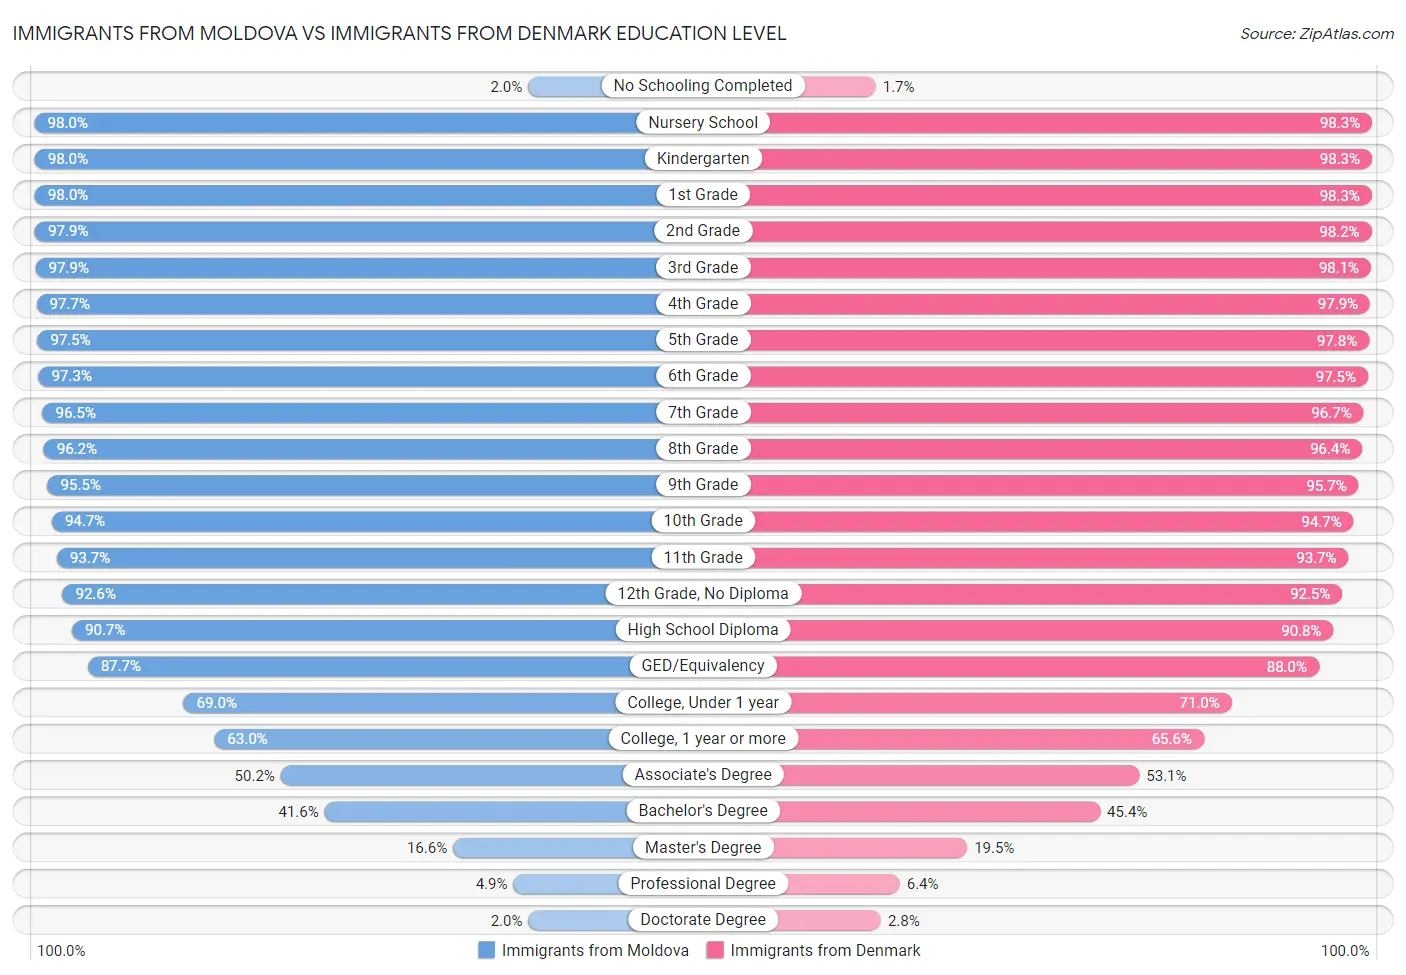 Immigrants from Moldova vs Immigrants from Denmark Education Level